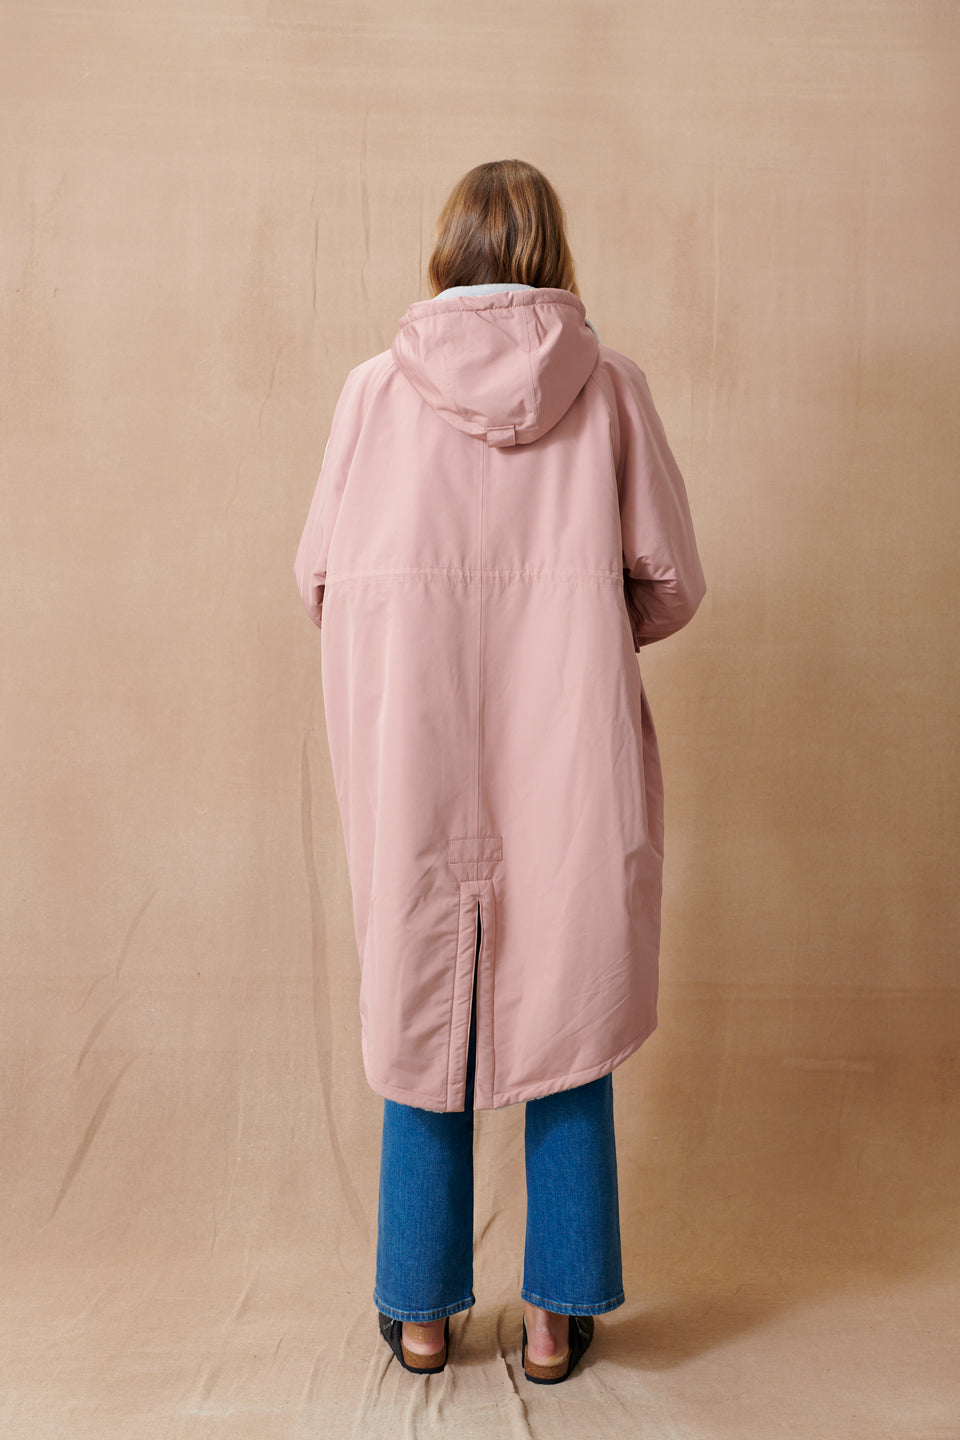 Snuggler Pink Waterproof Changing Coat